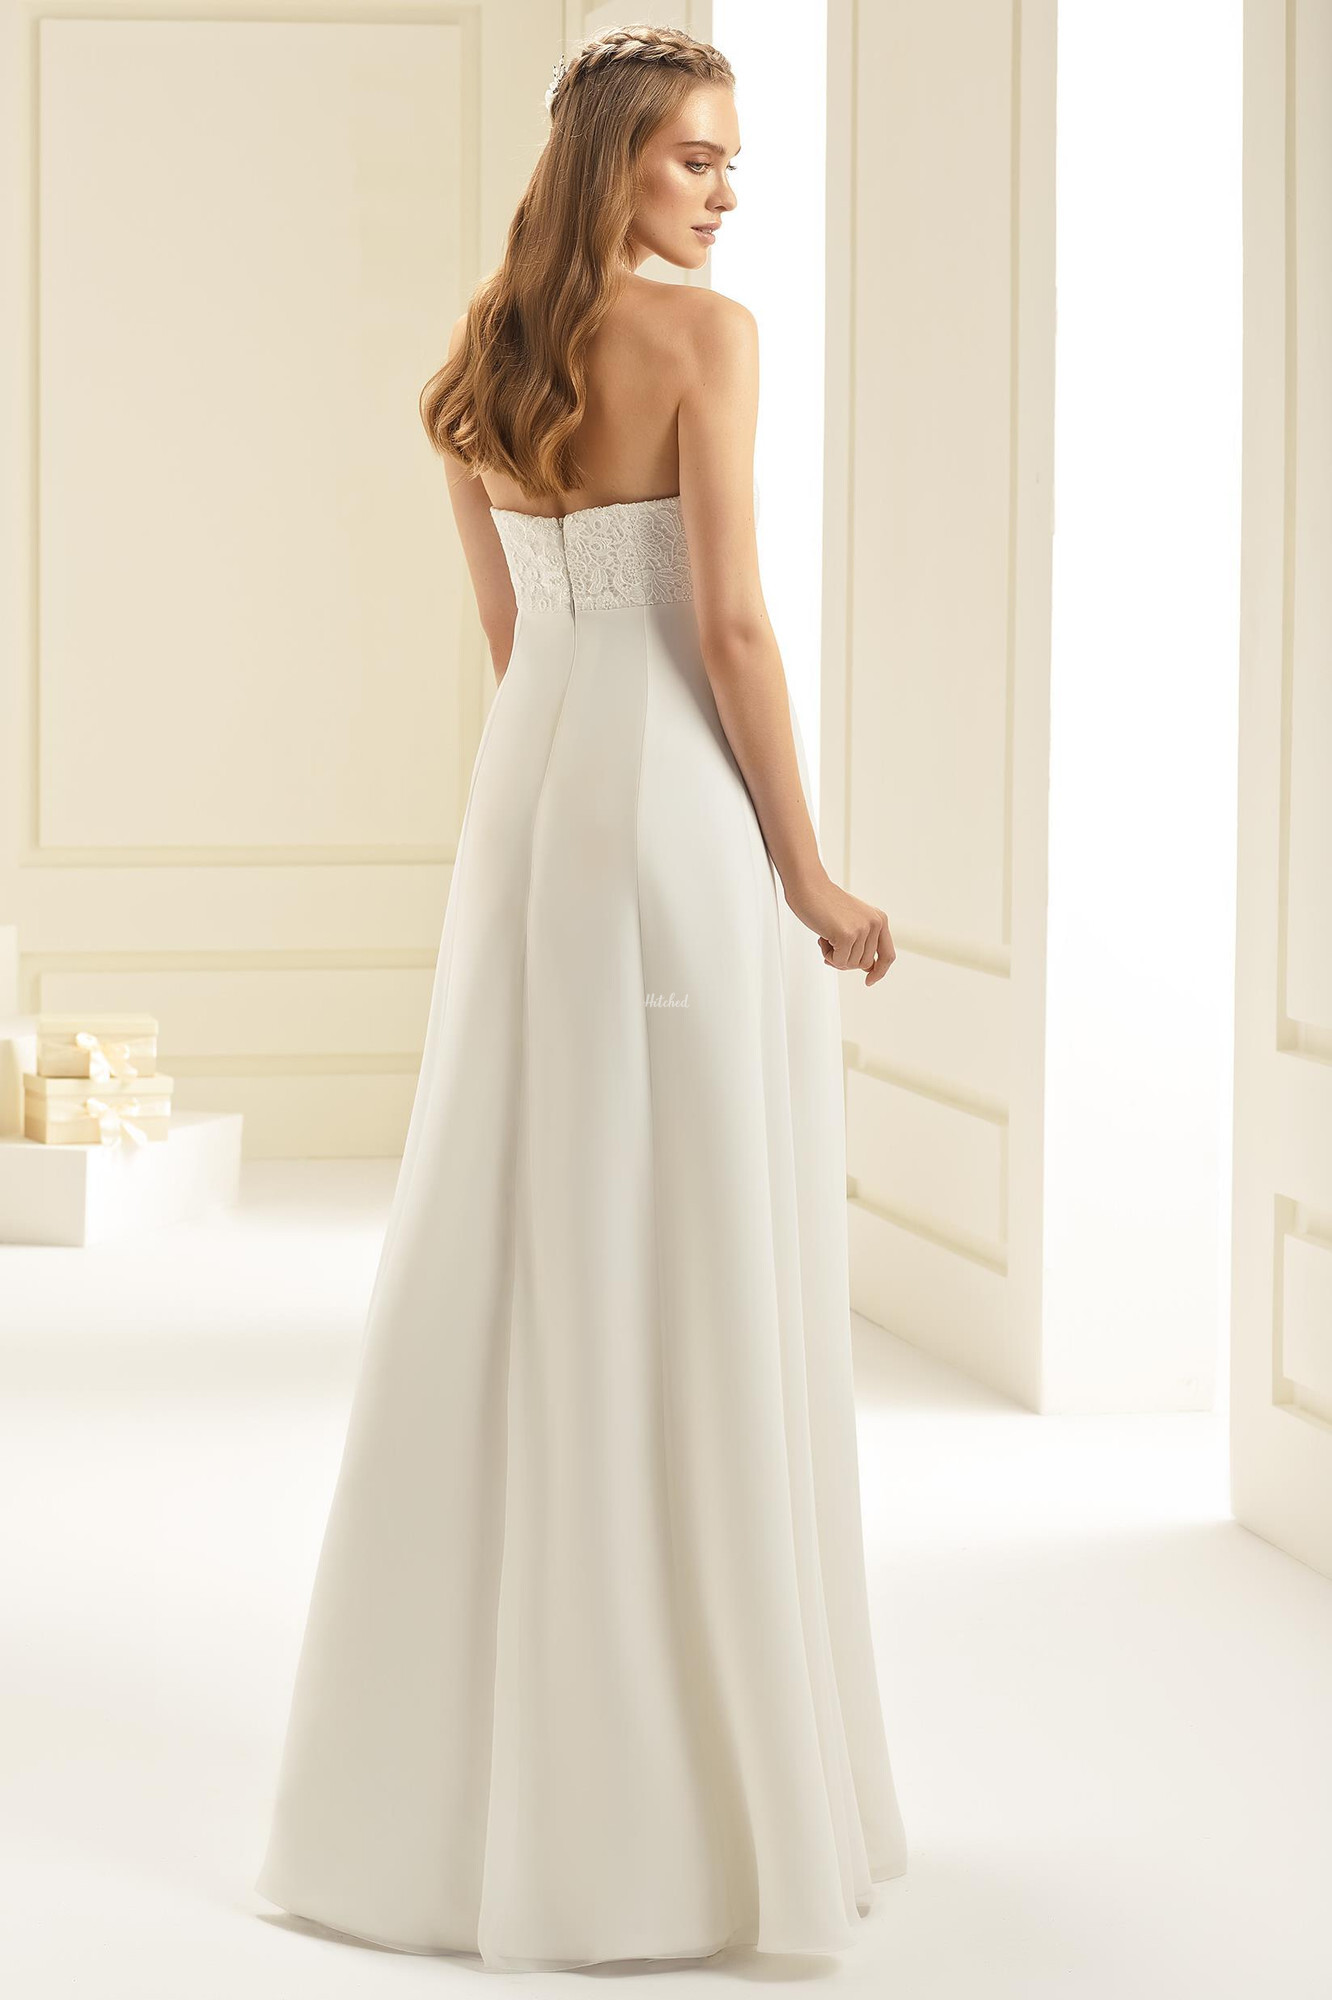 Grecian Wedding Dresses Top 10 grecian wedding dresses - Find the ...